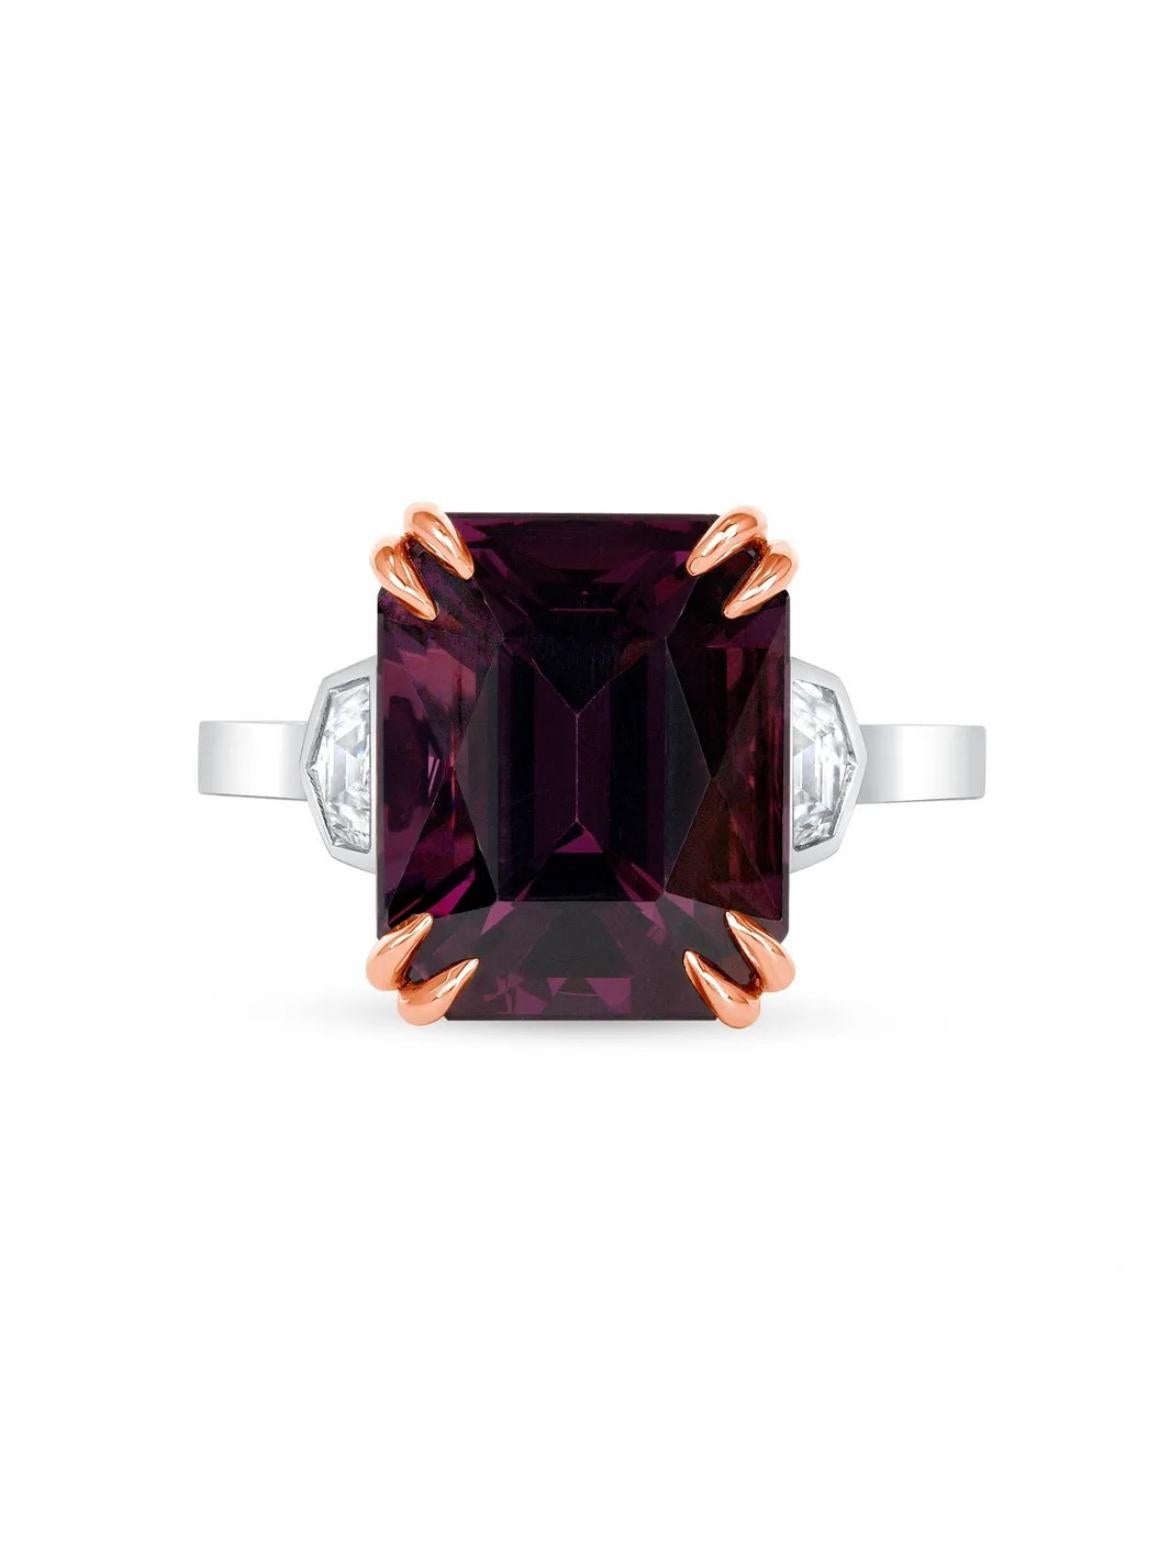 Emerald Cut 7.39ct untreated emerald-cut purple Spinel ring. GIA certified. 